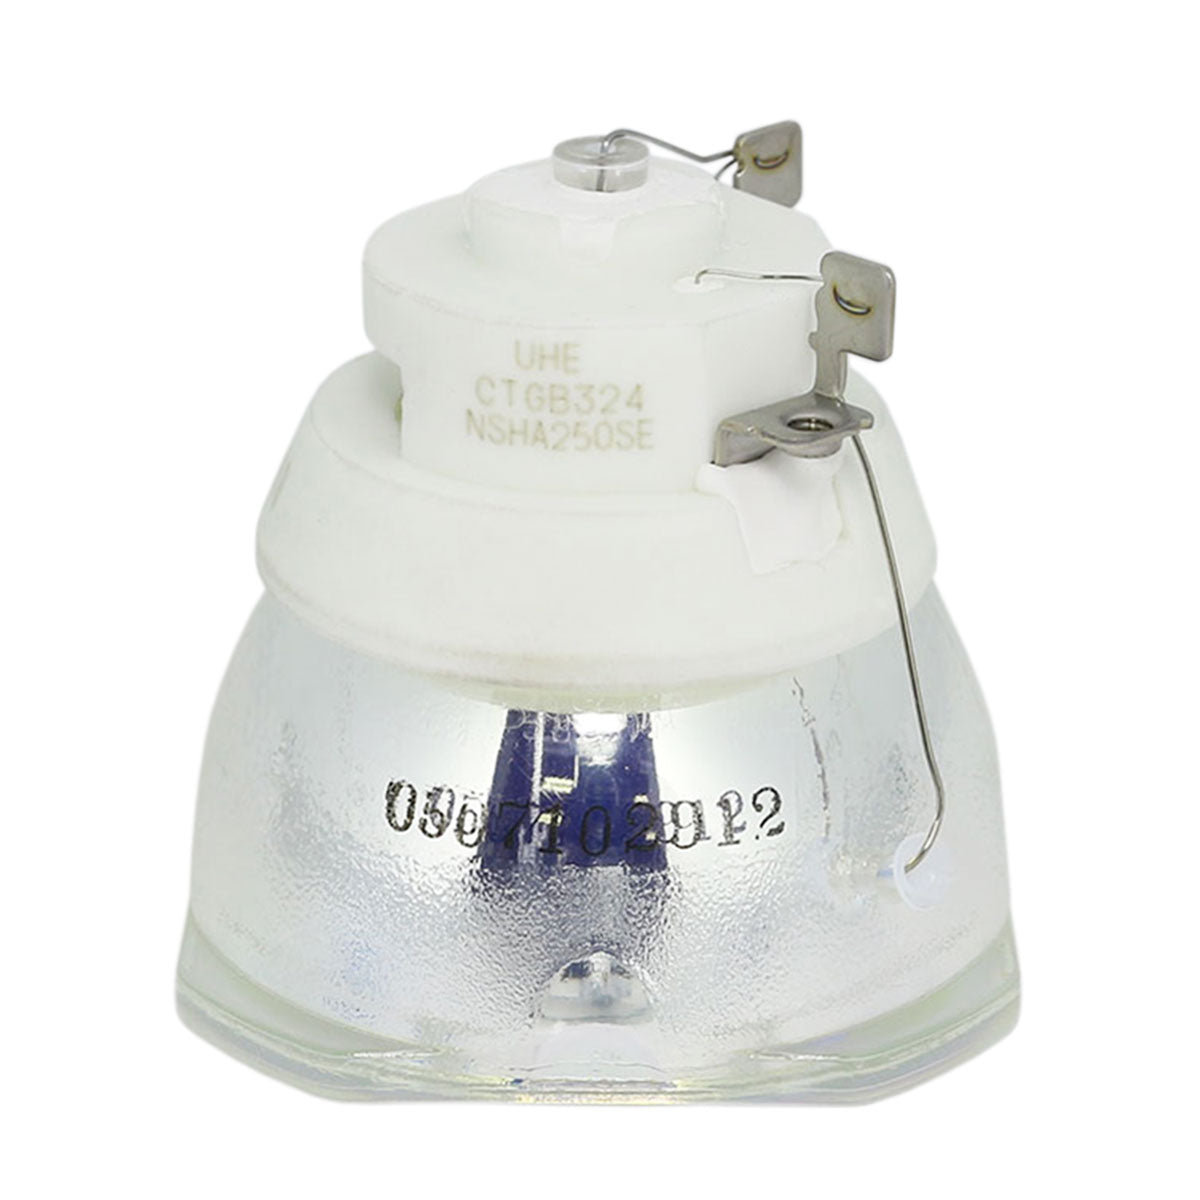 Ushio NSHA250SE Ushio Projector Bare Lamp